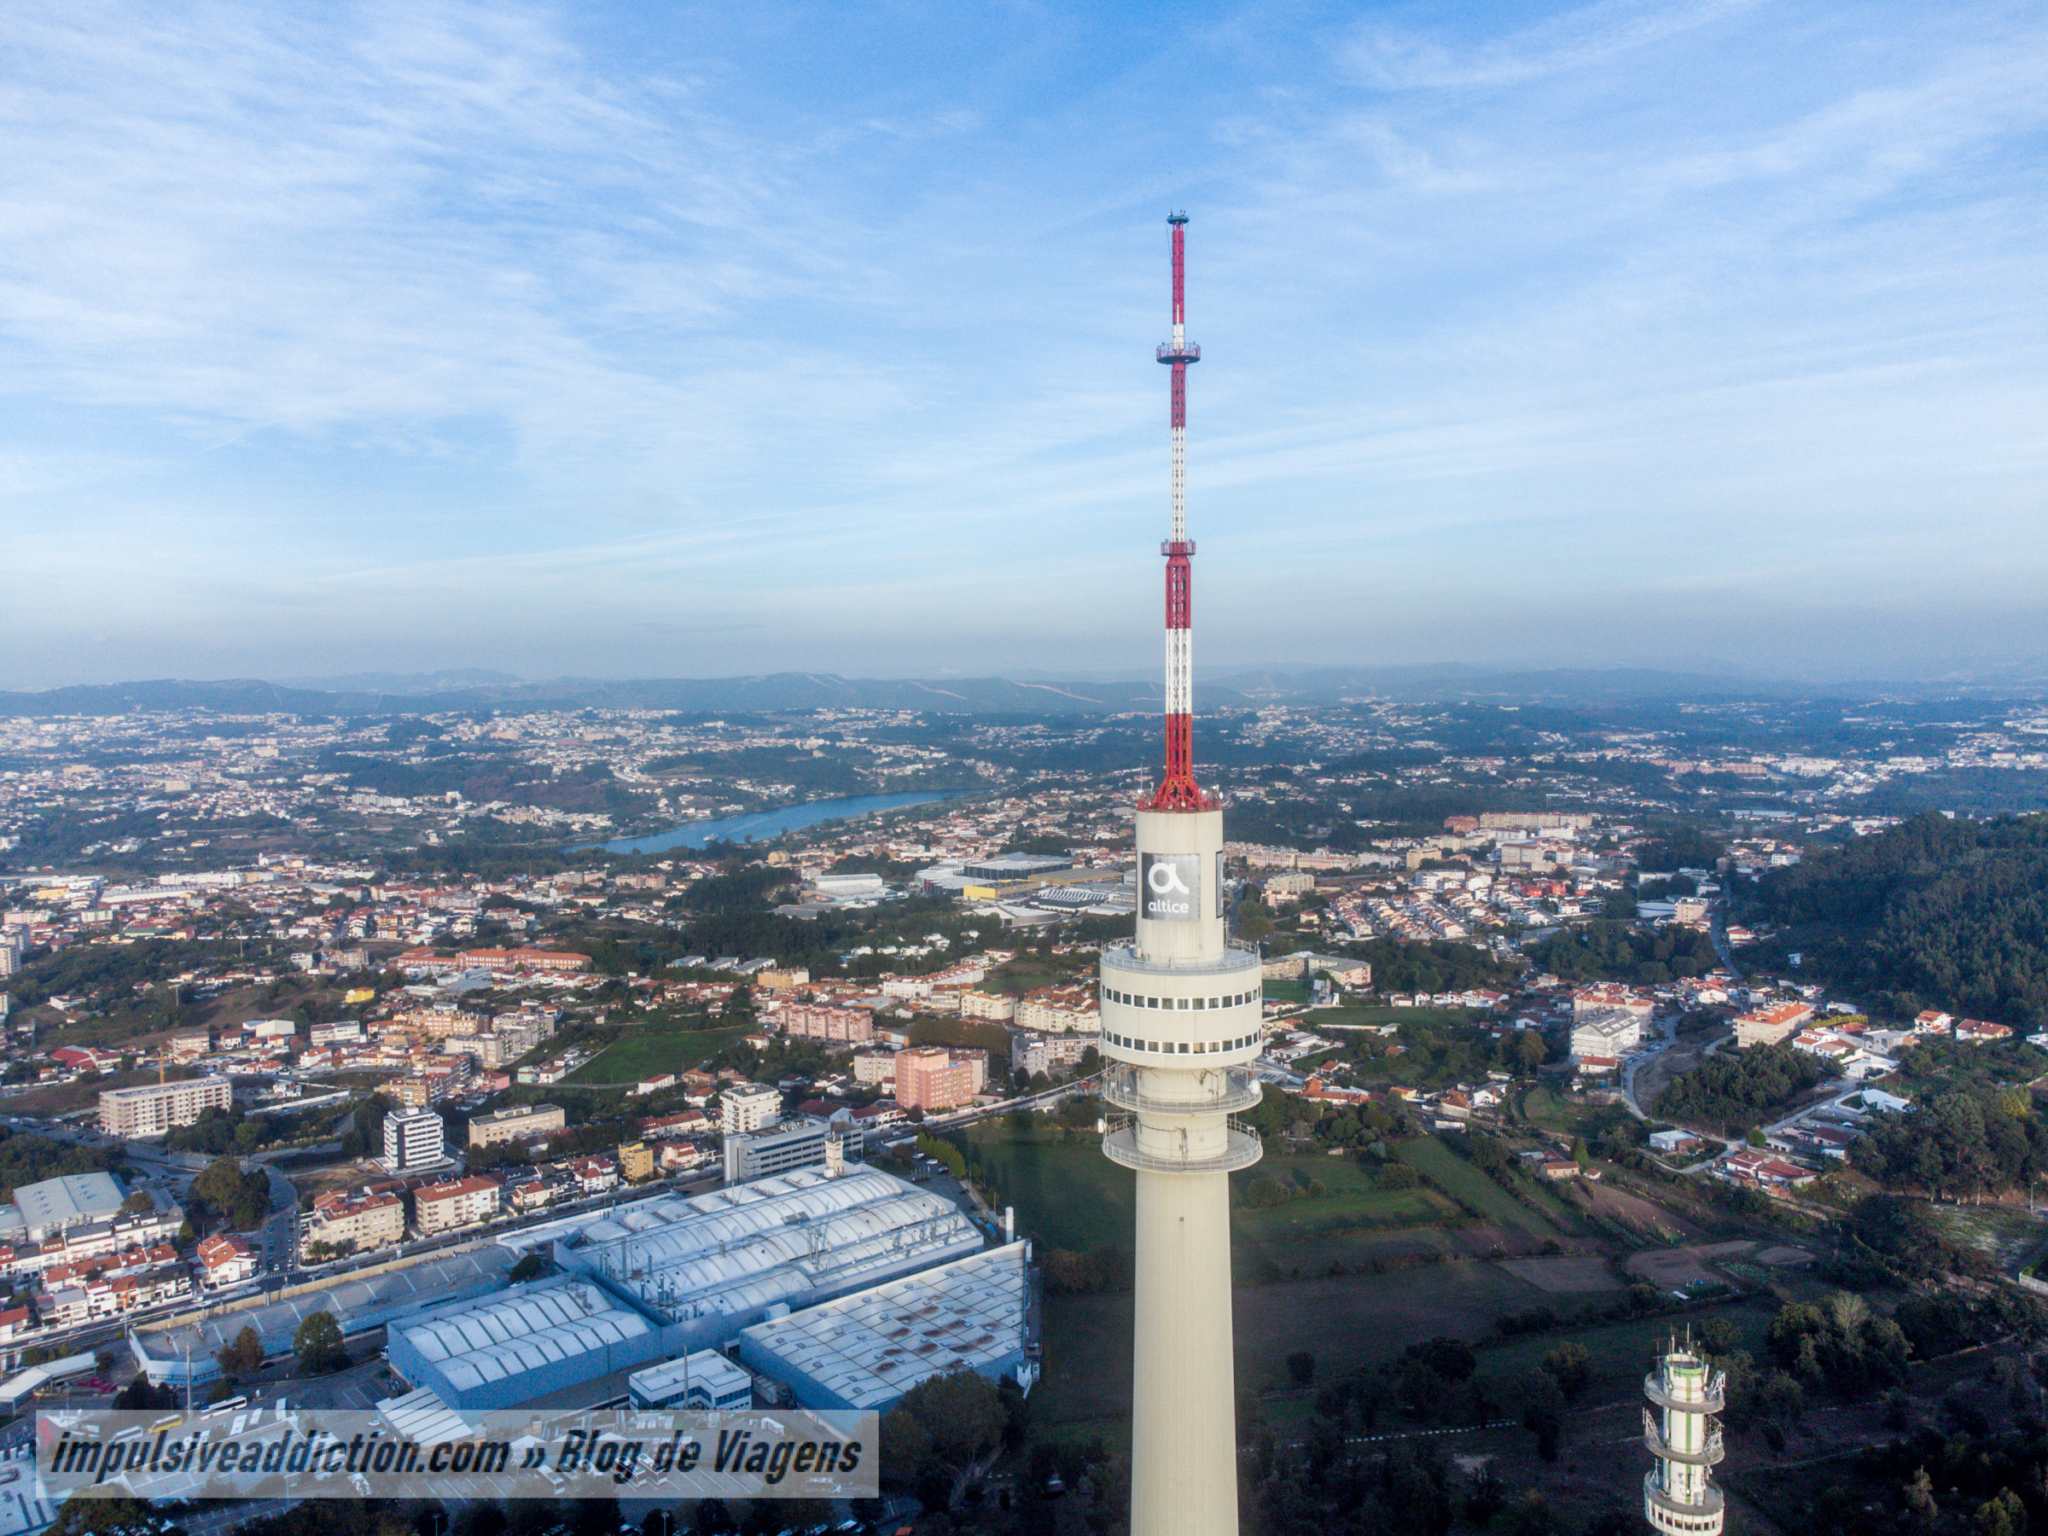 Altice Tower in Vila Nova de Gaia